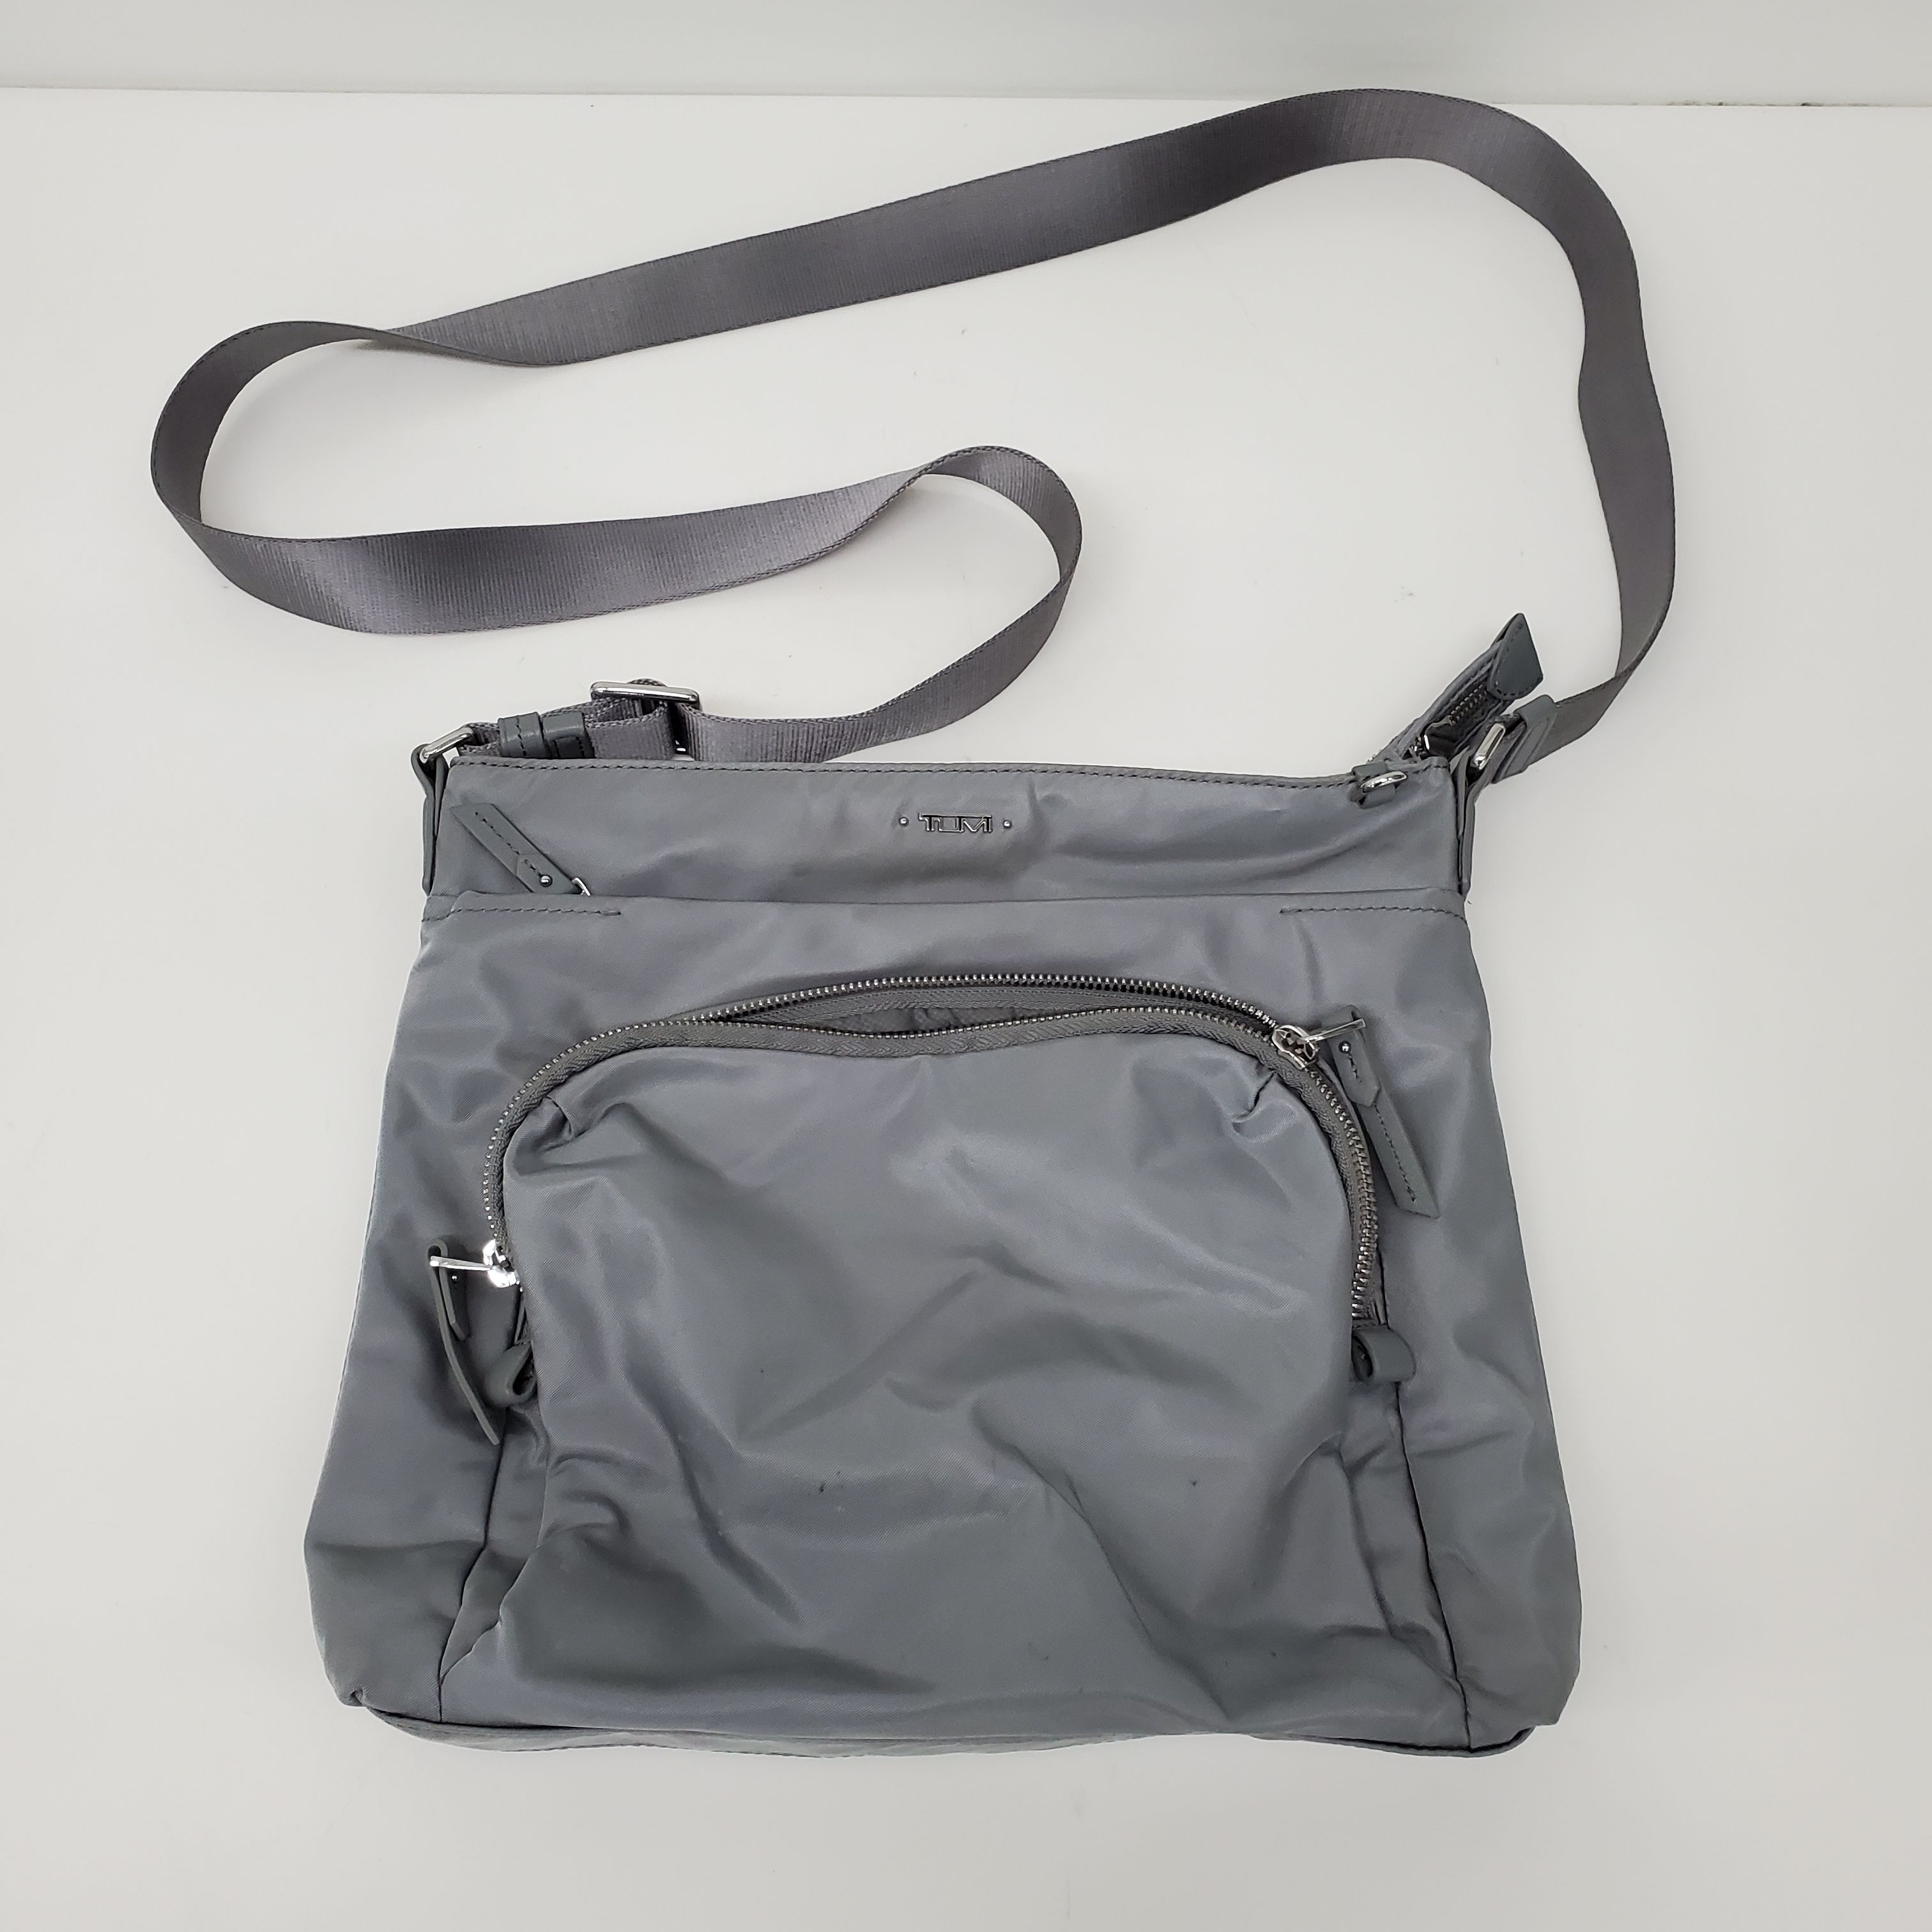 Tumi Add a Bag Strap, Hobbies & Toys, Travel, Travel Essentials